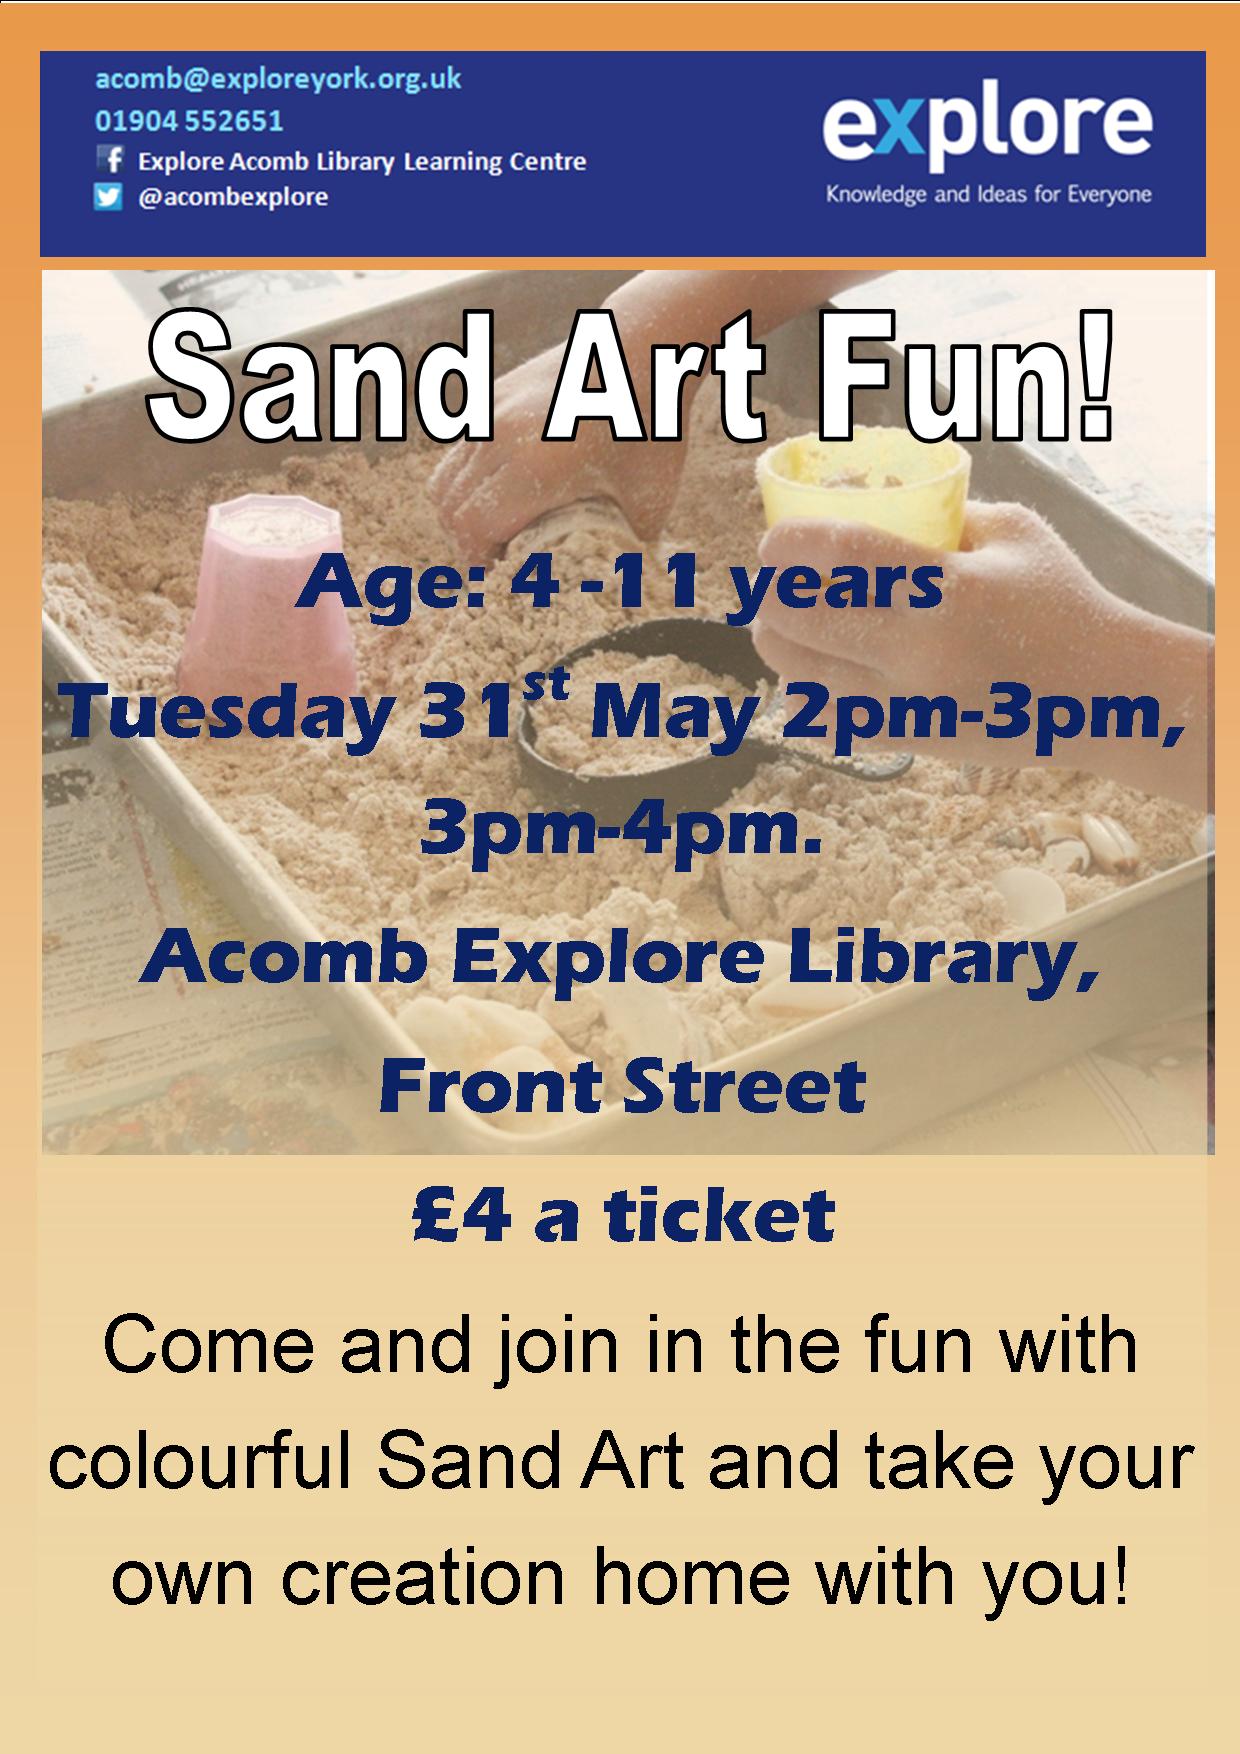 Sand art fund 31st May 2016